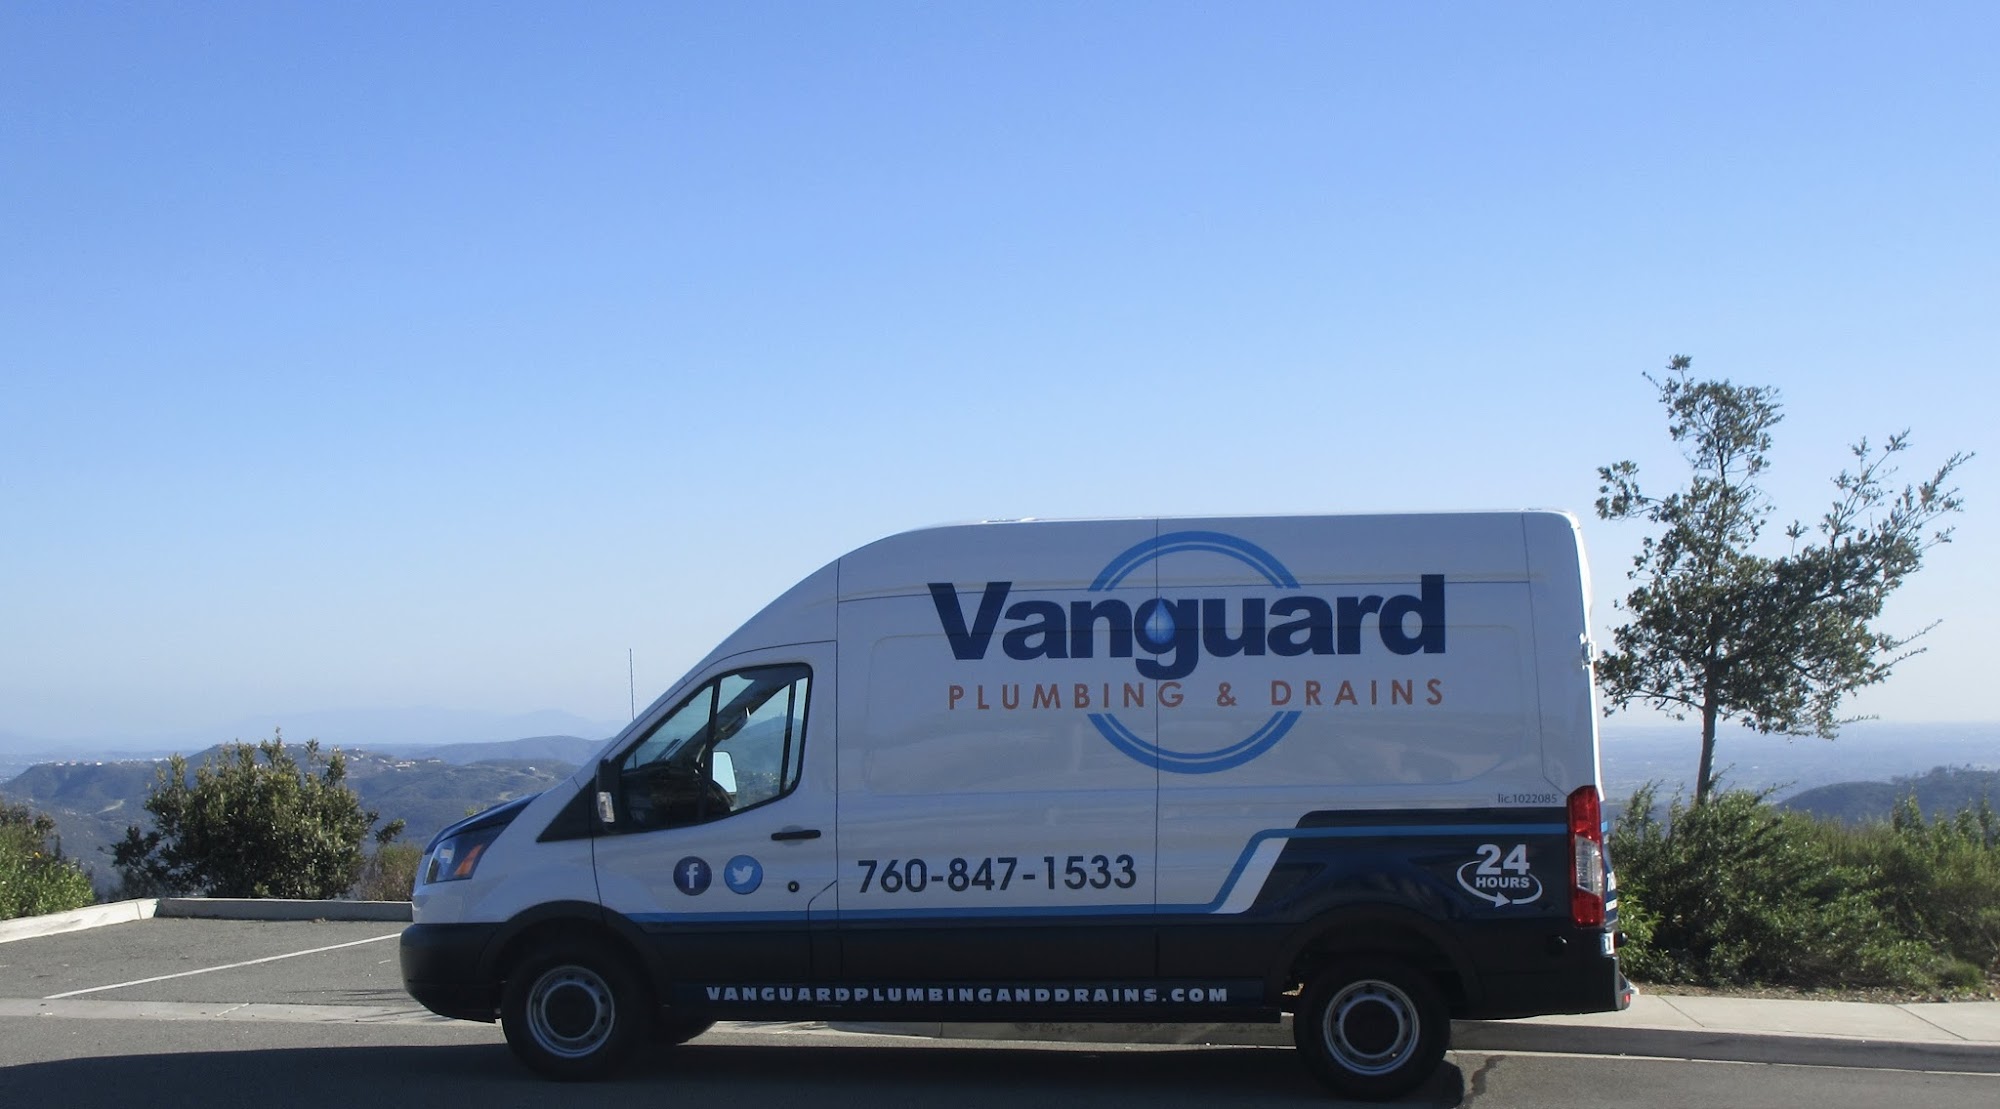 Vanguard Plumbing & Drains, Inc.